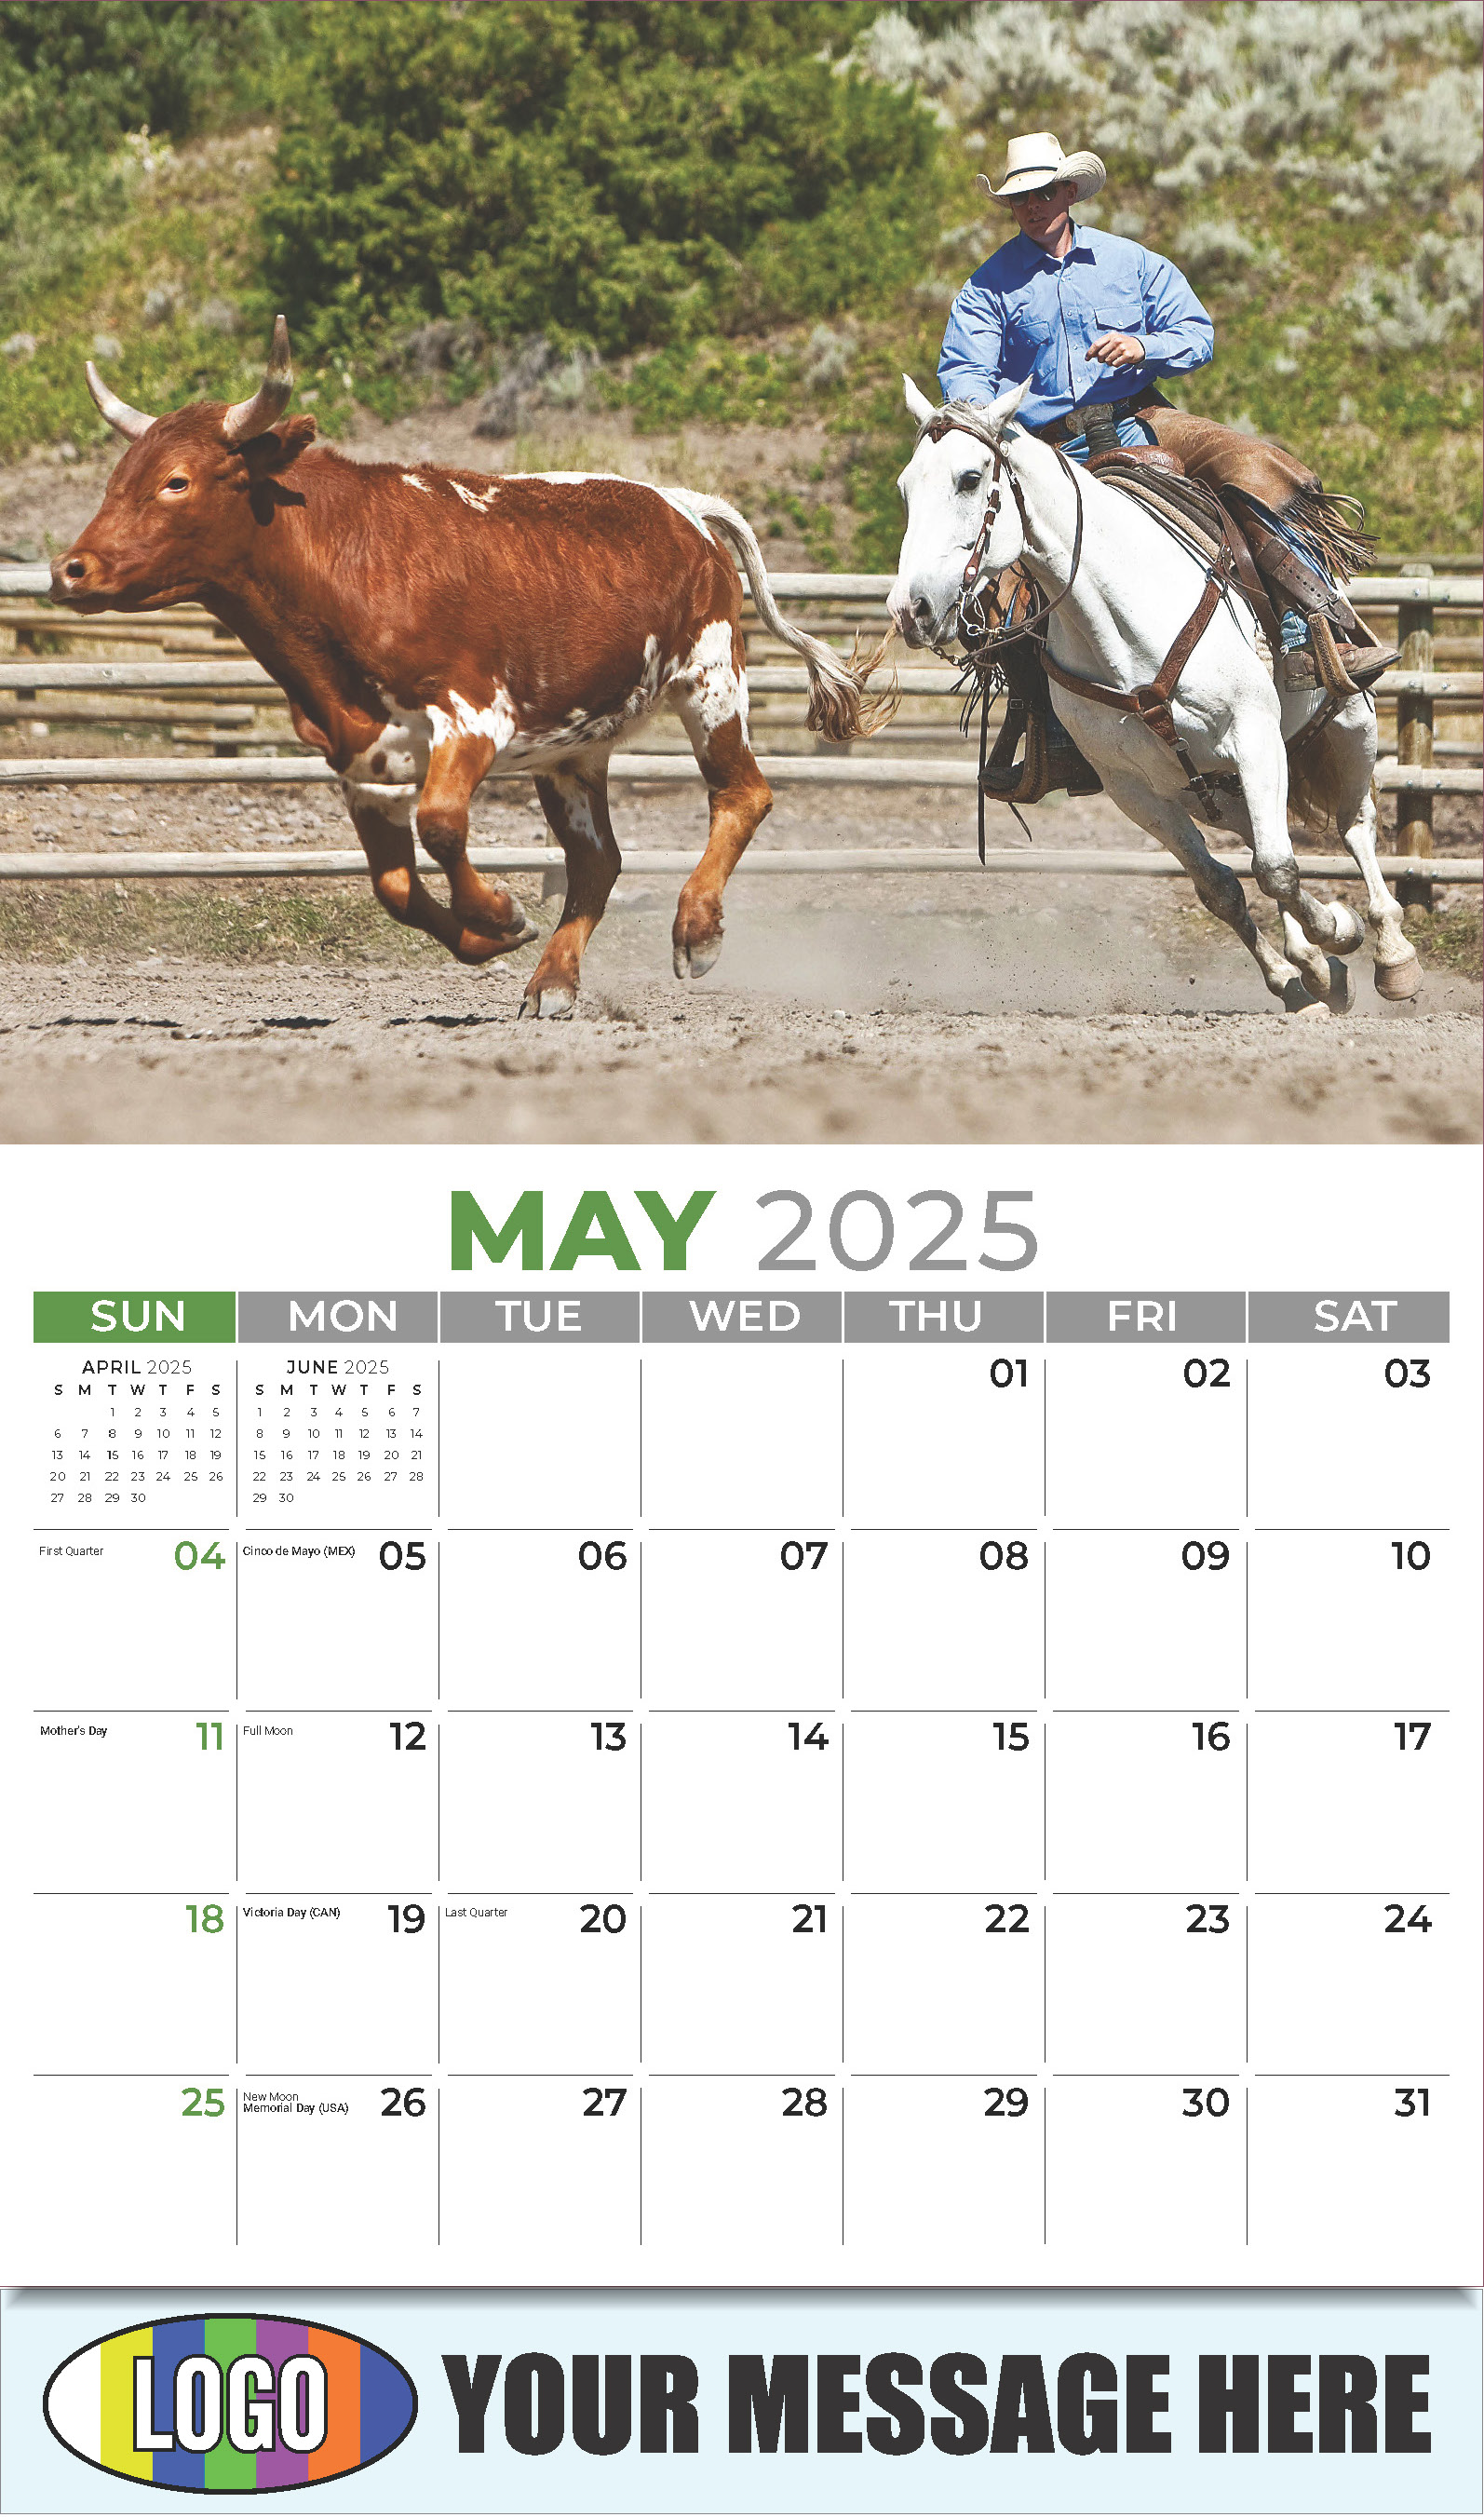 Country Spirit 2025 Business Advertising Calendar - May